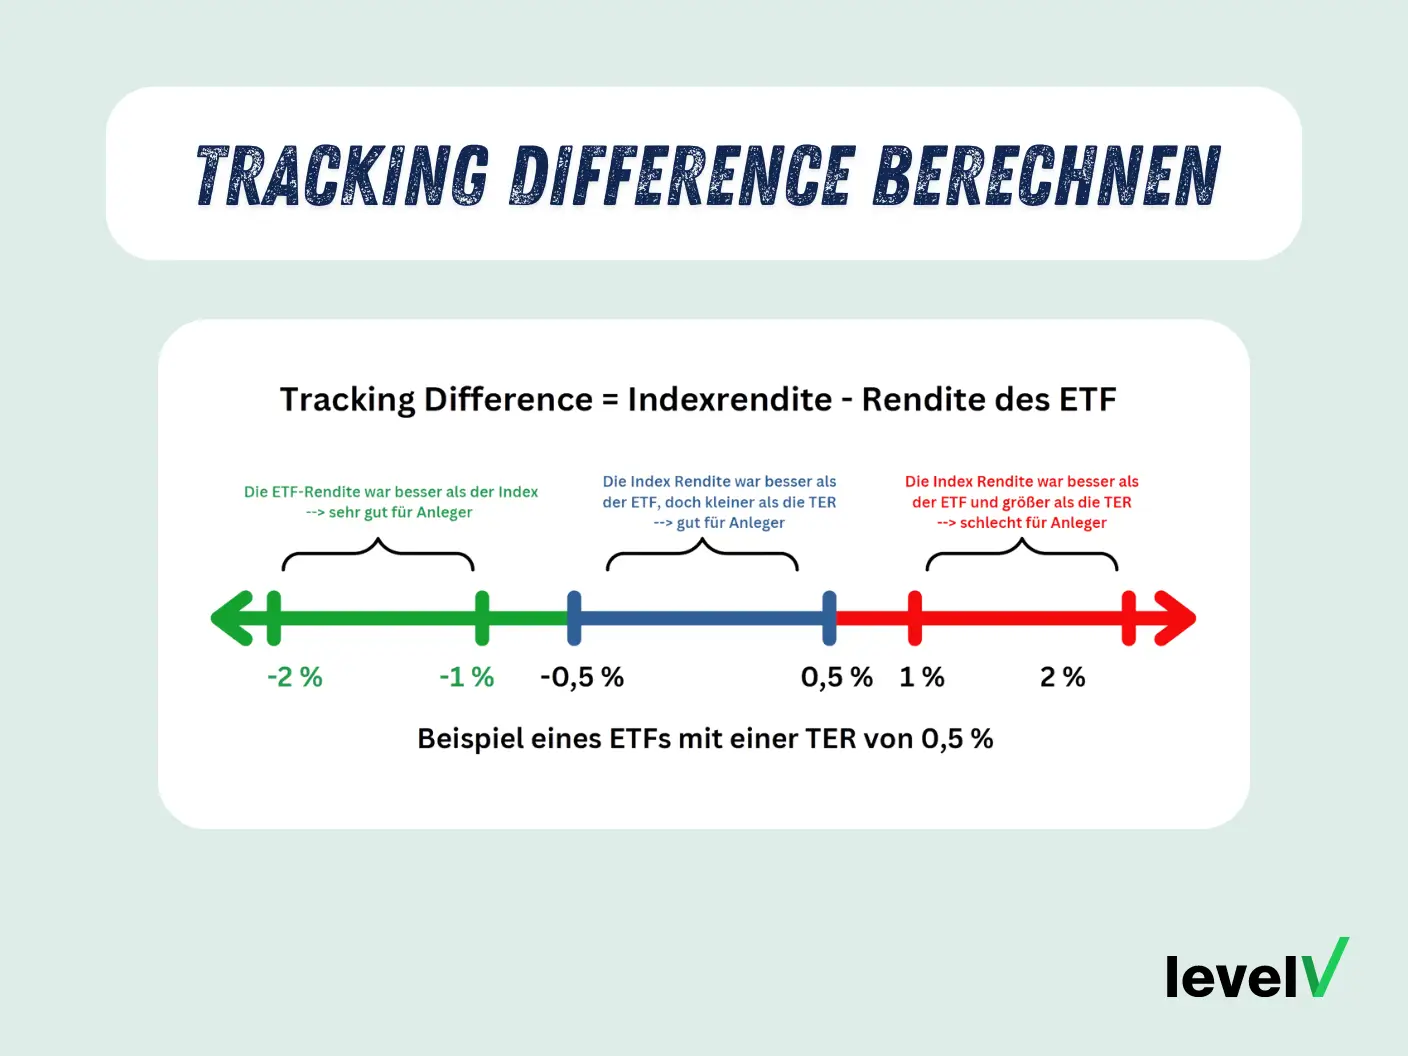 Tracking Difference berechnen